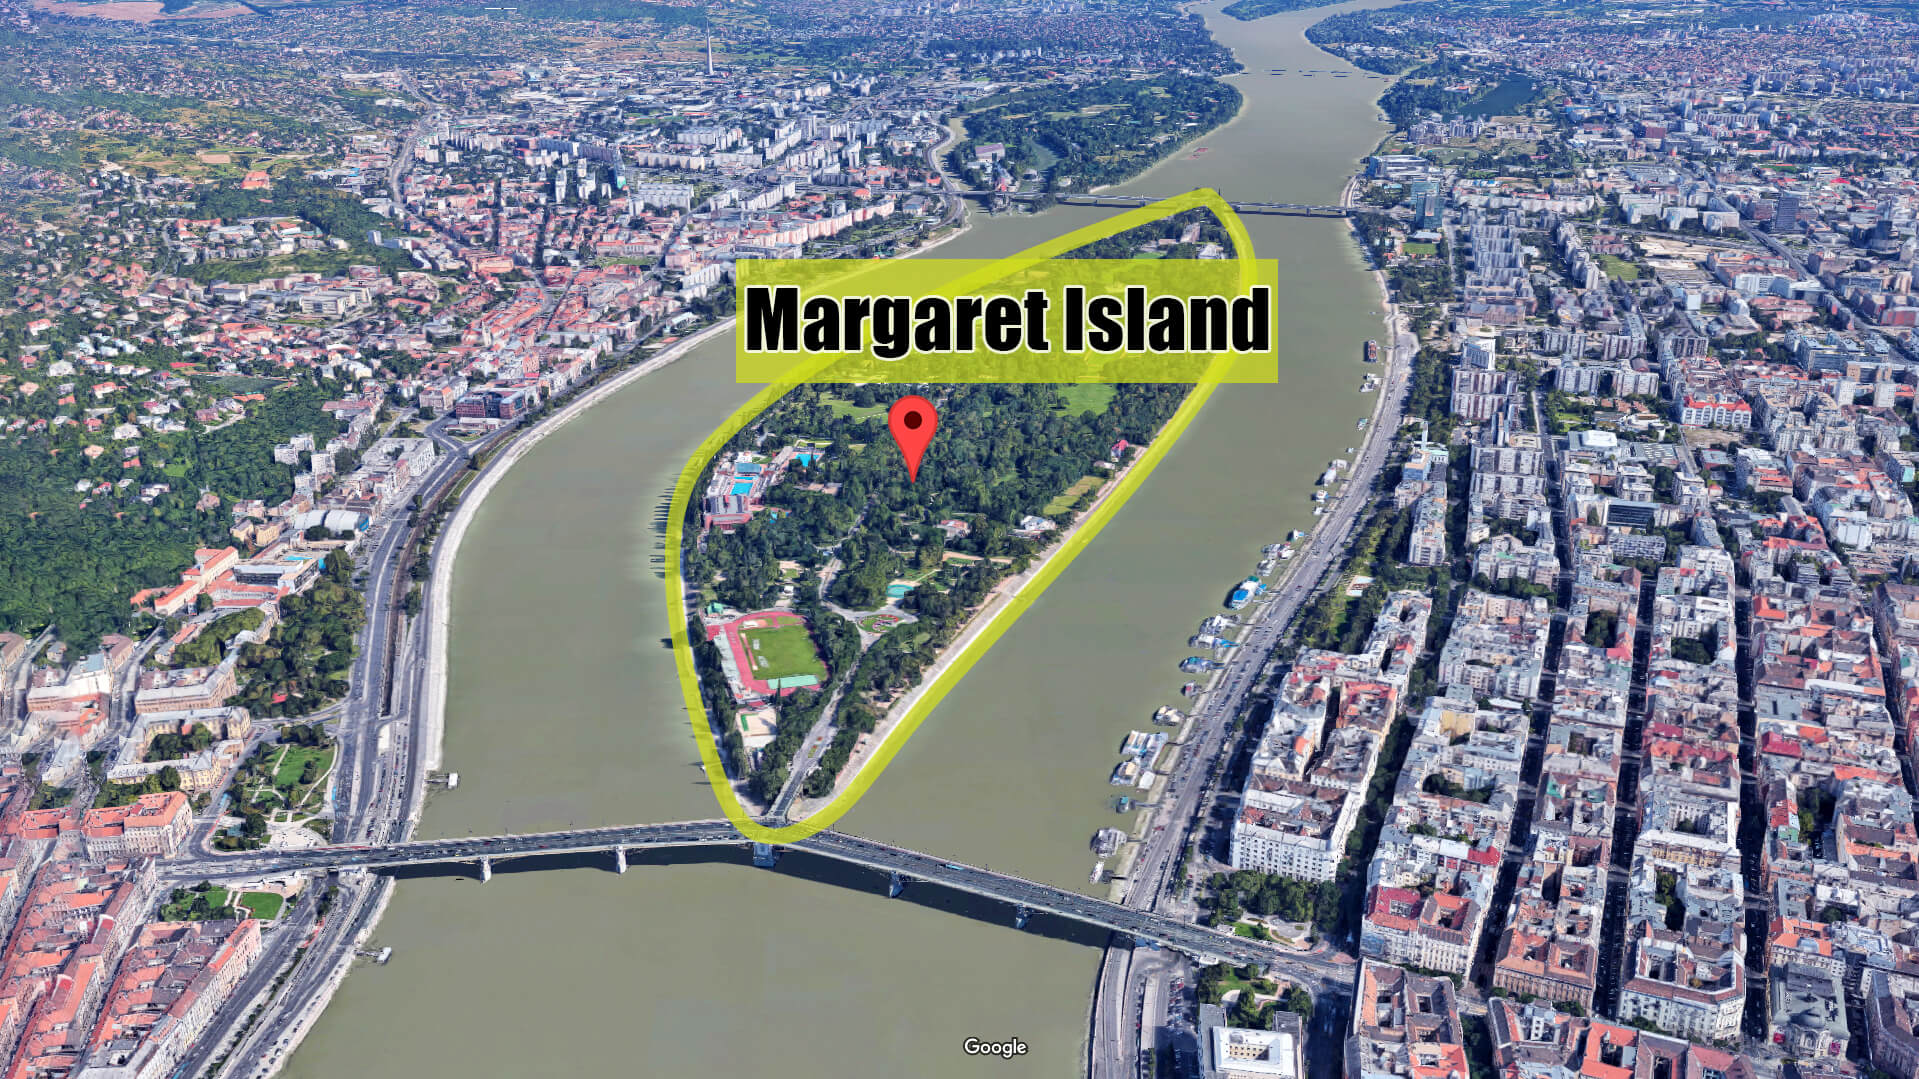 View of Margaret Island via google maps satellite view